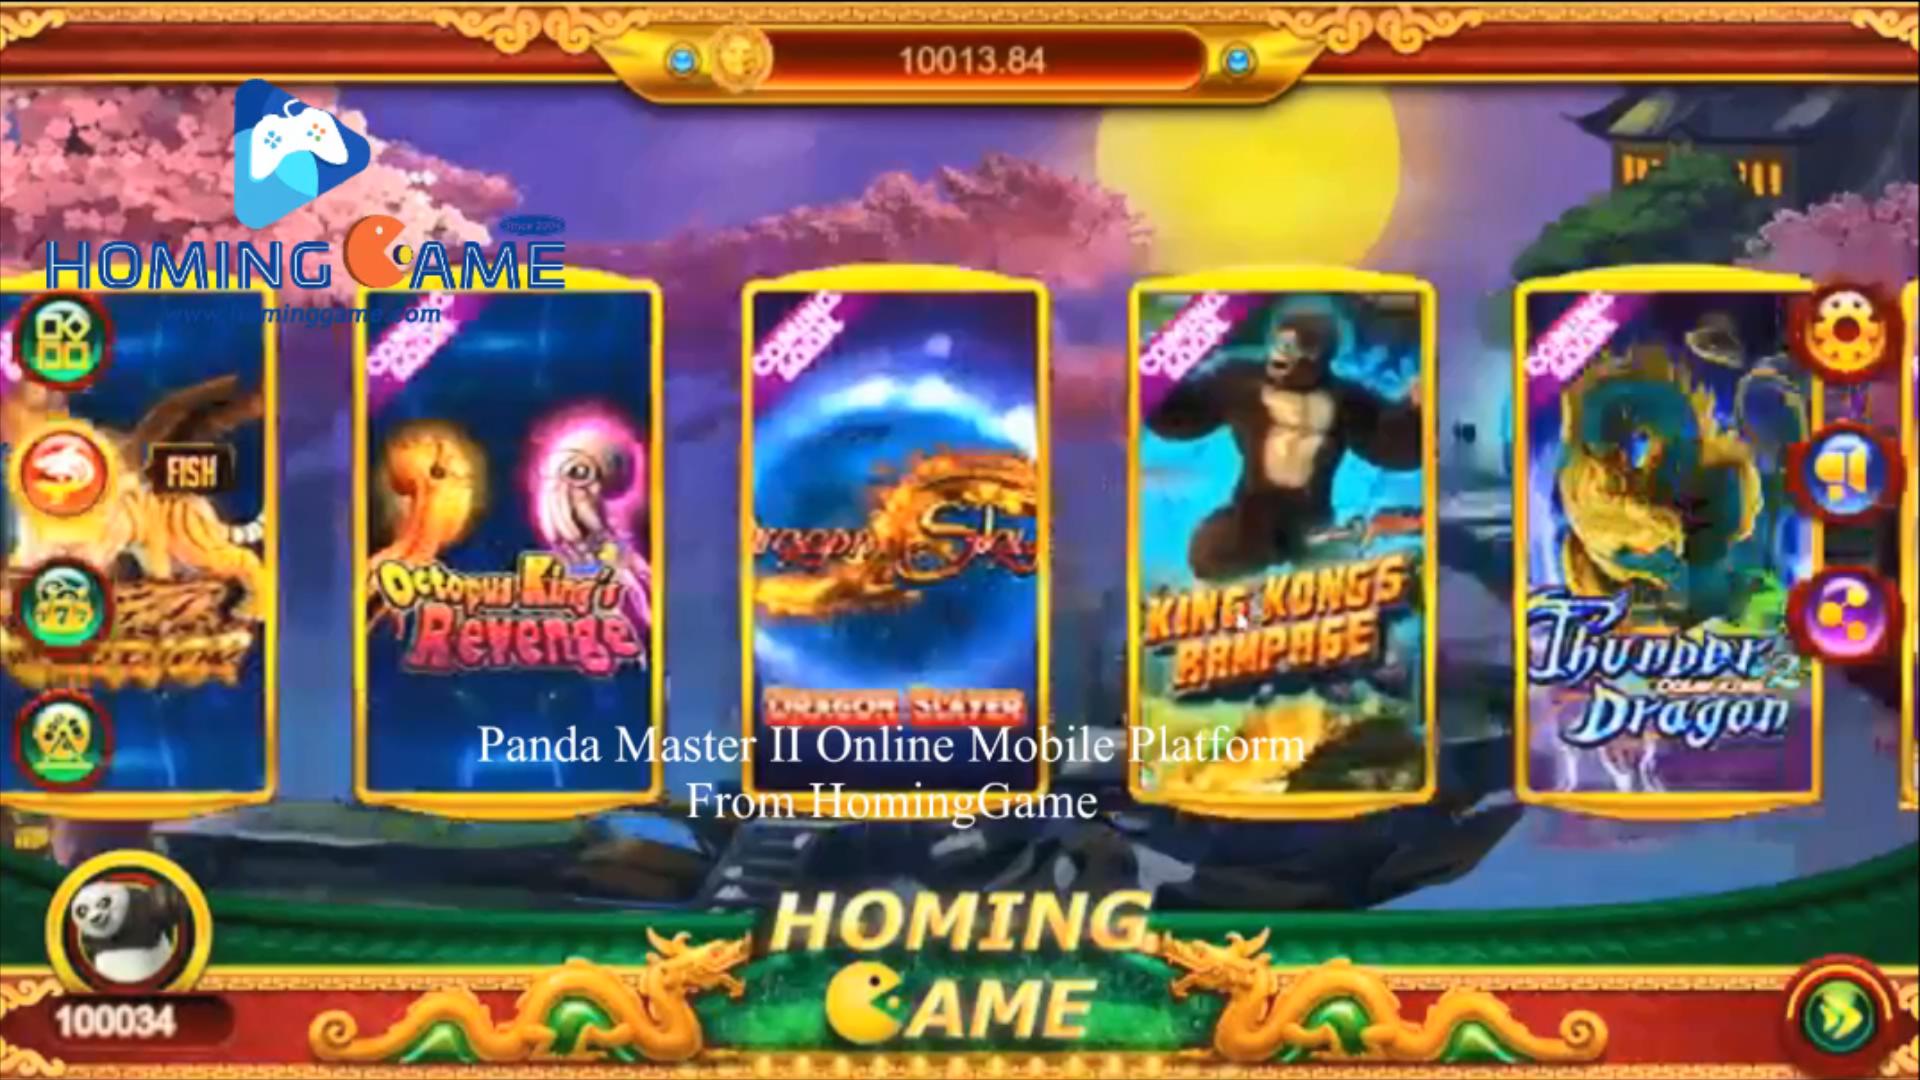 2022 HomingGame Panda Master 2: Online Mobile Fishing Game